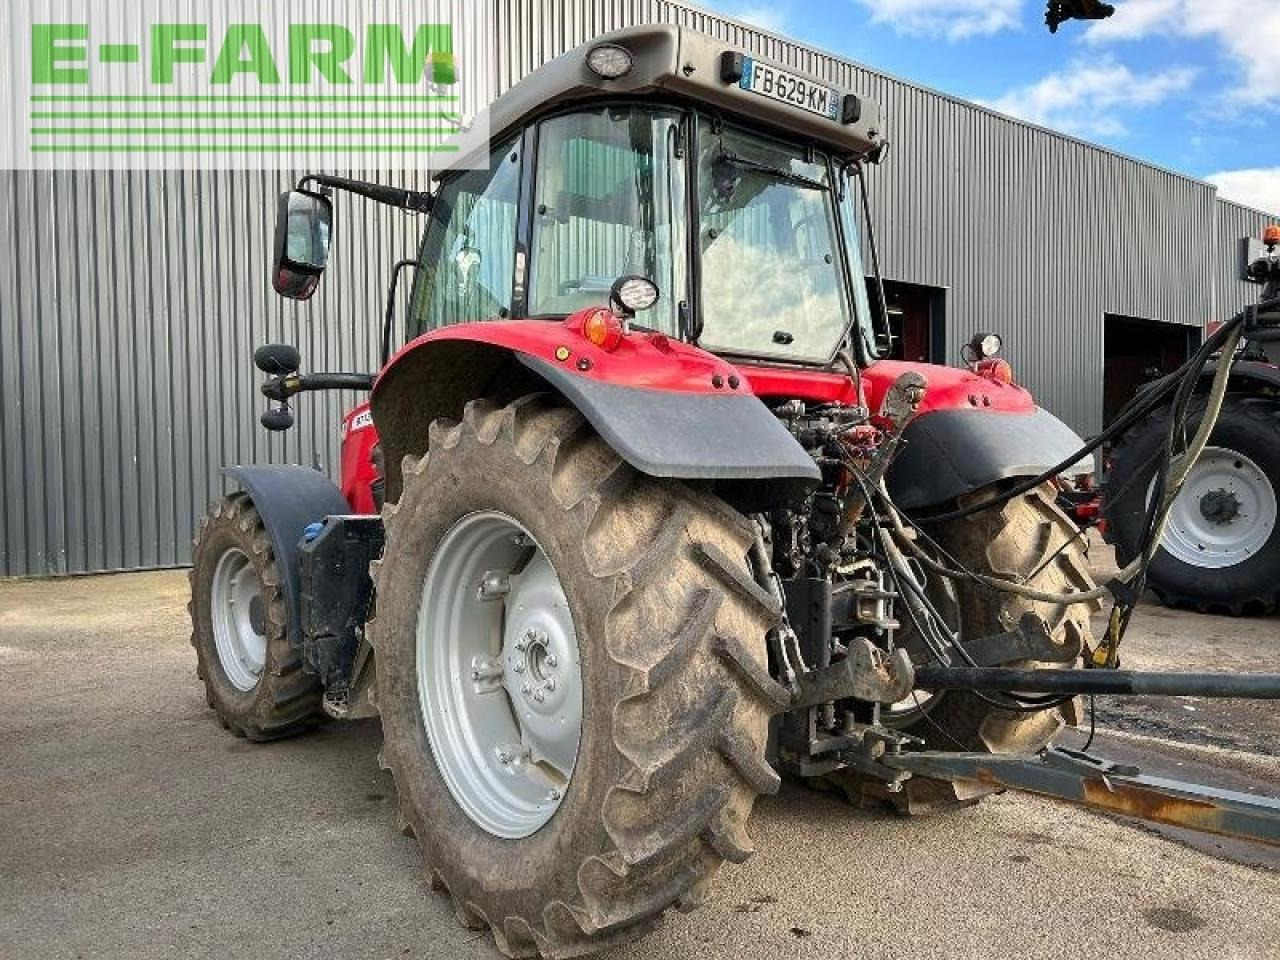 Farm tractor Massey Ferguson mf6713s new: picture 3